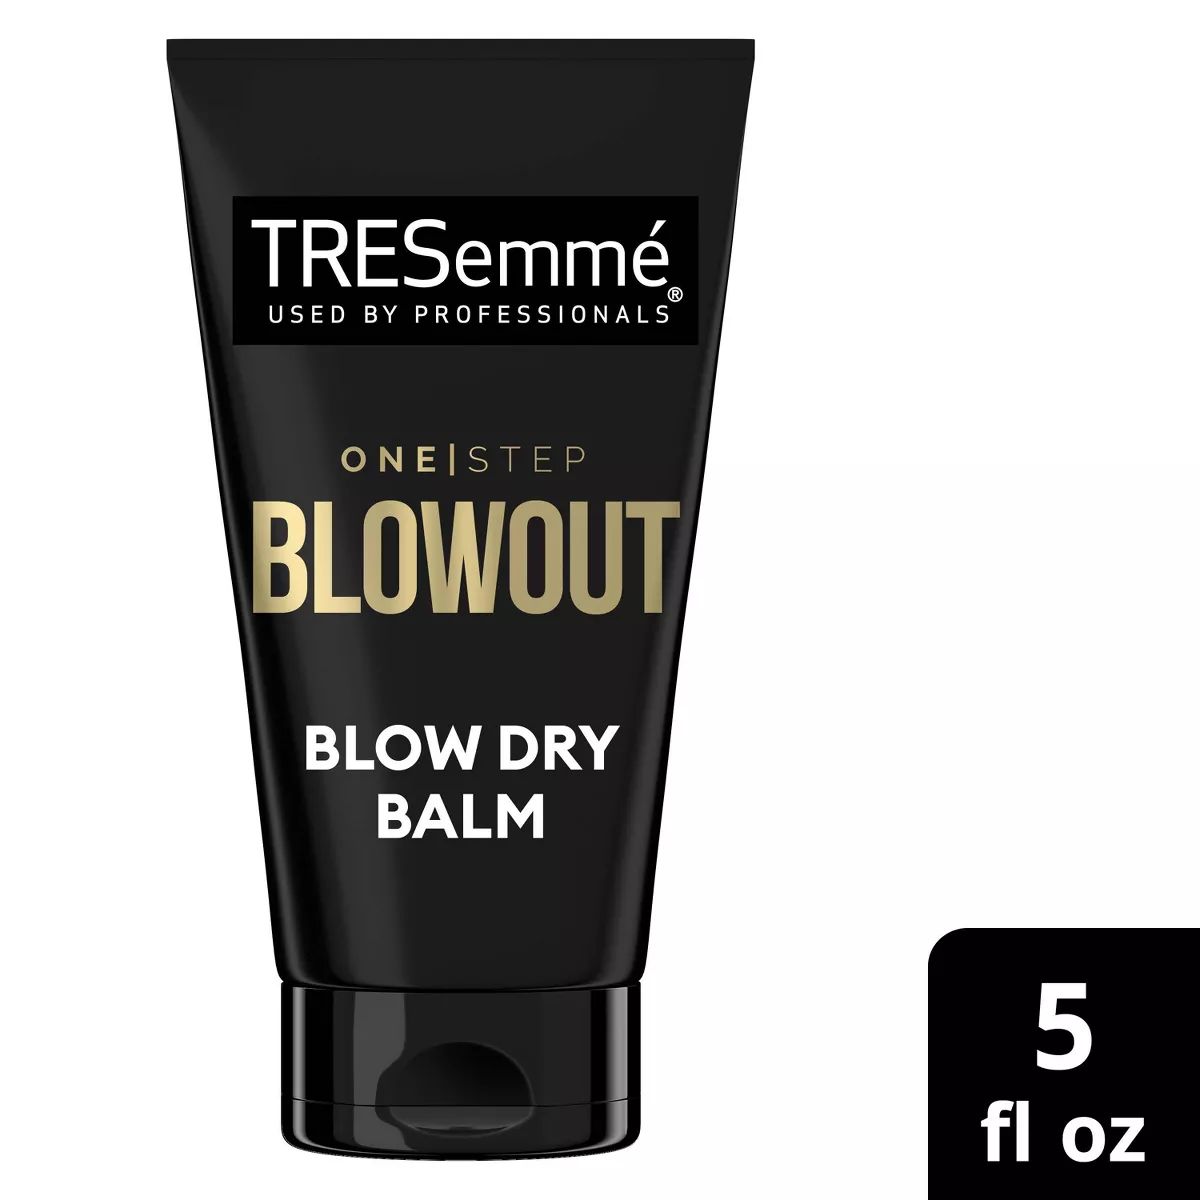 Tresemme One Step Blowout for Fine, Medium Hair Blow Dry Balm - 5 fl oz | Target